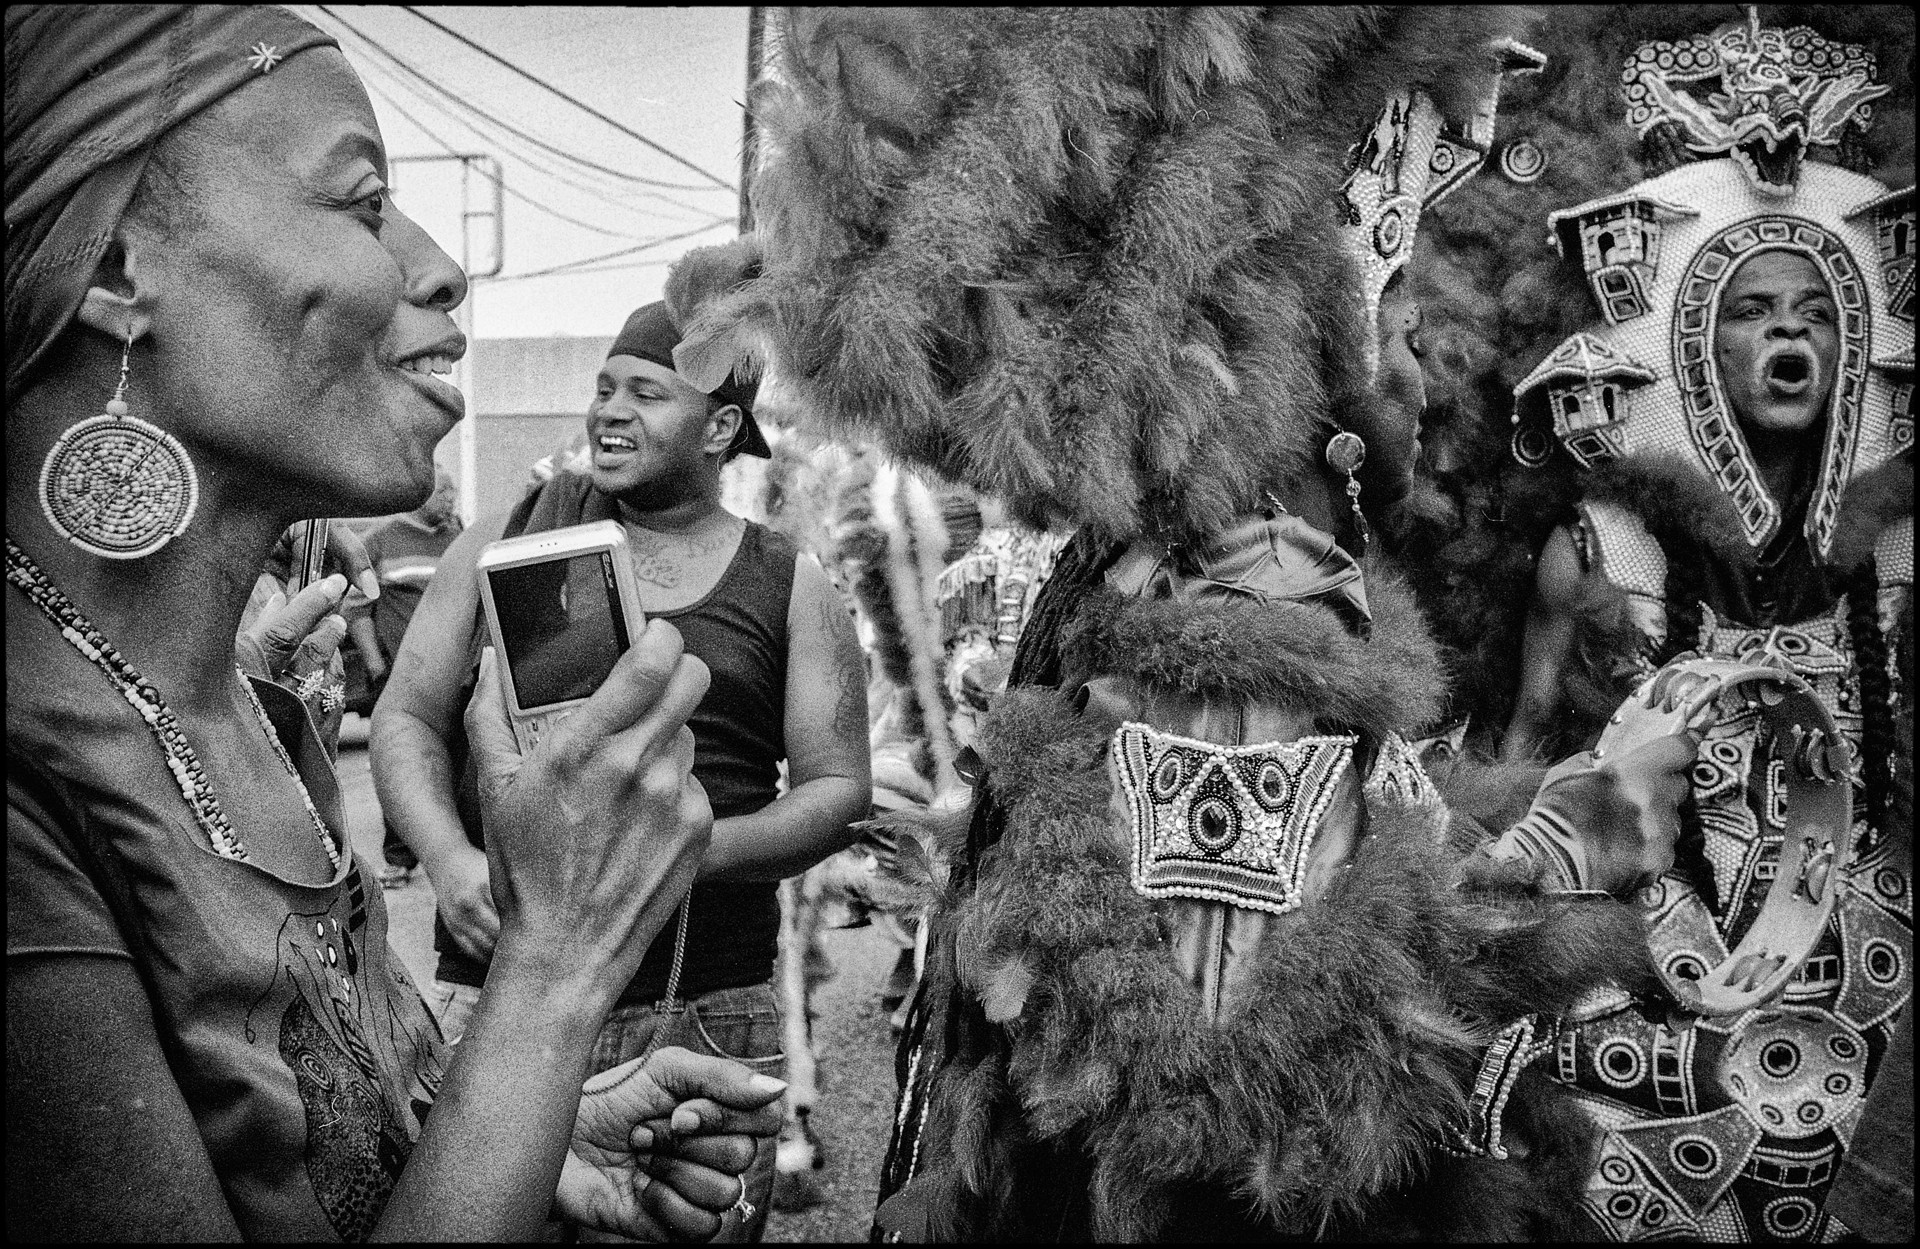 Mardi Gras Indians 11 (open edition) by James Hayman